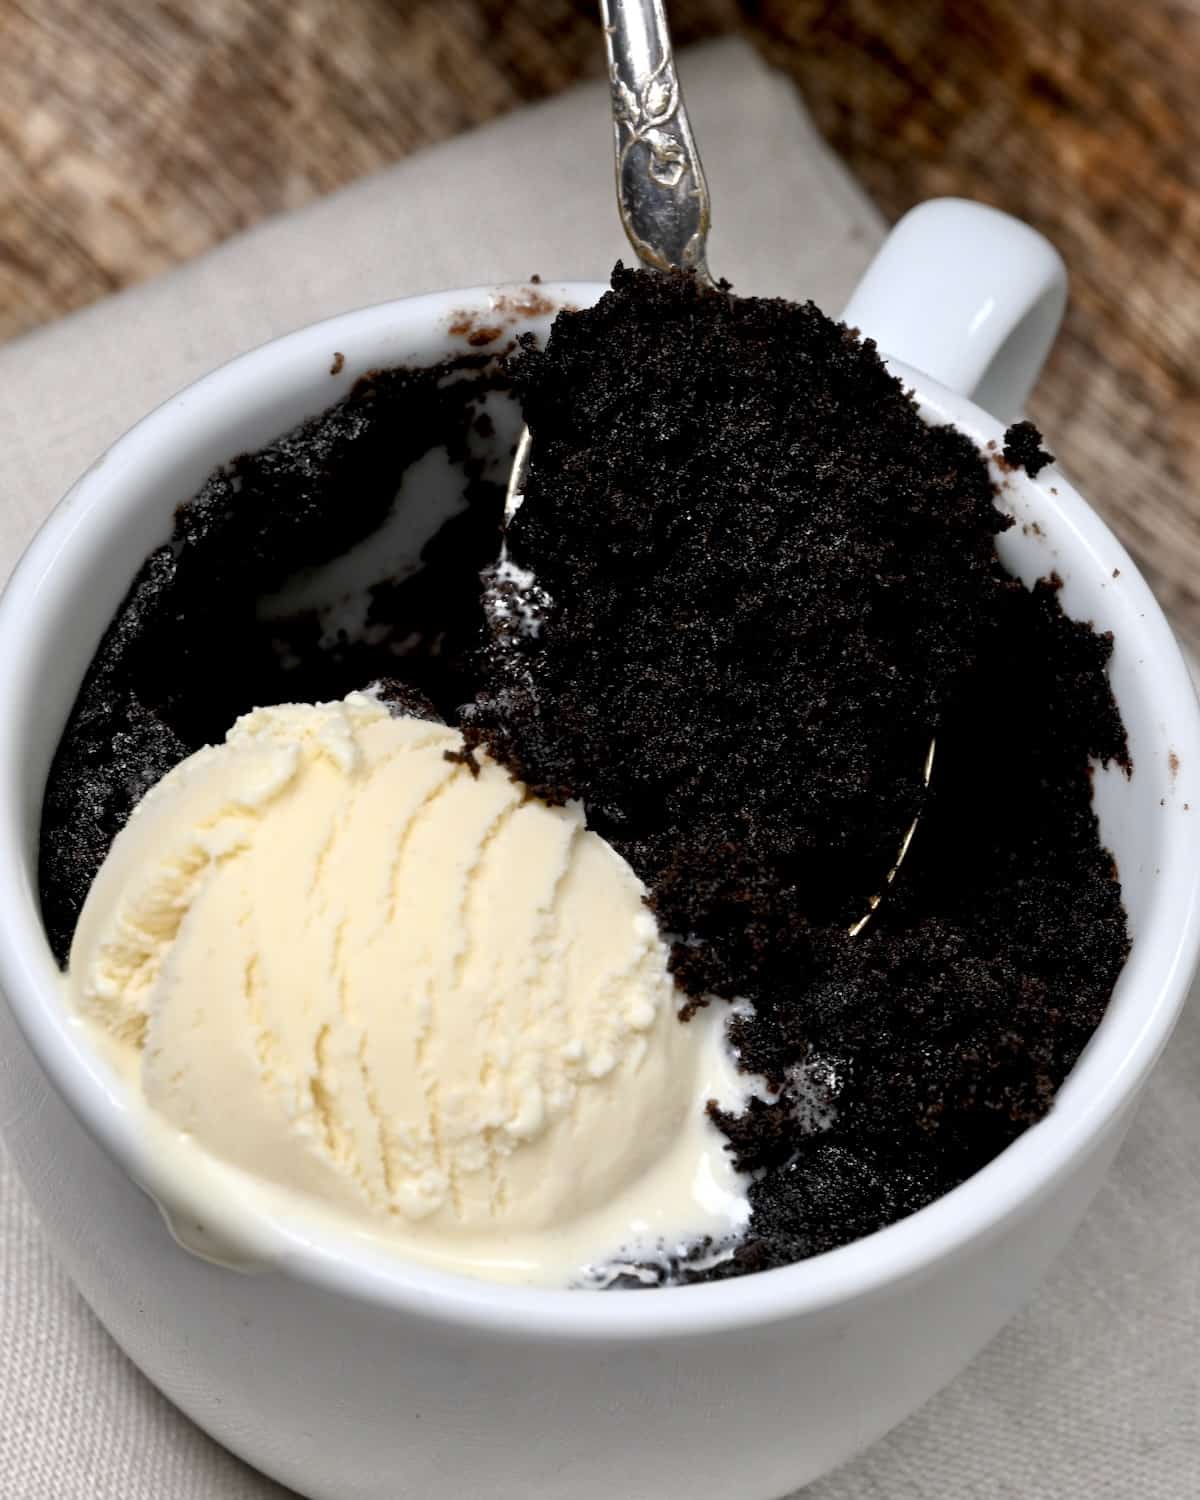 A spoonful of Oreo microwave mug cake with ice cream